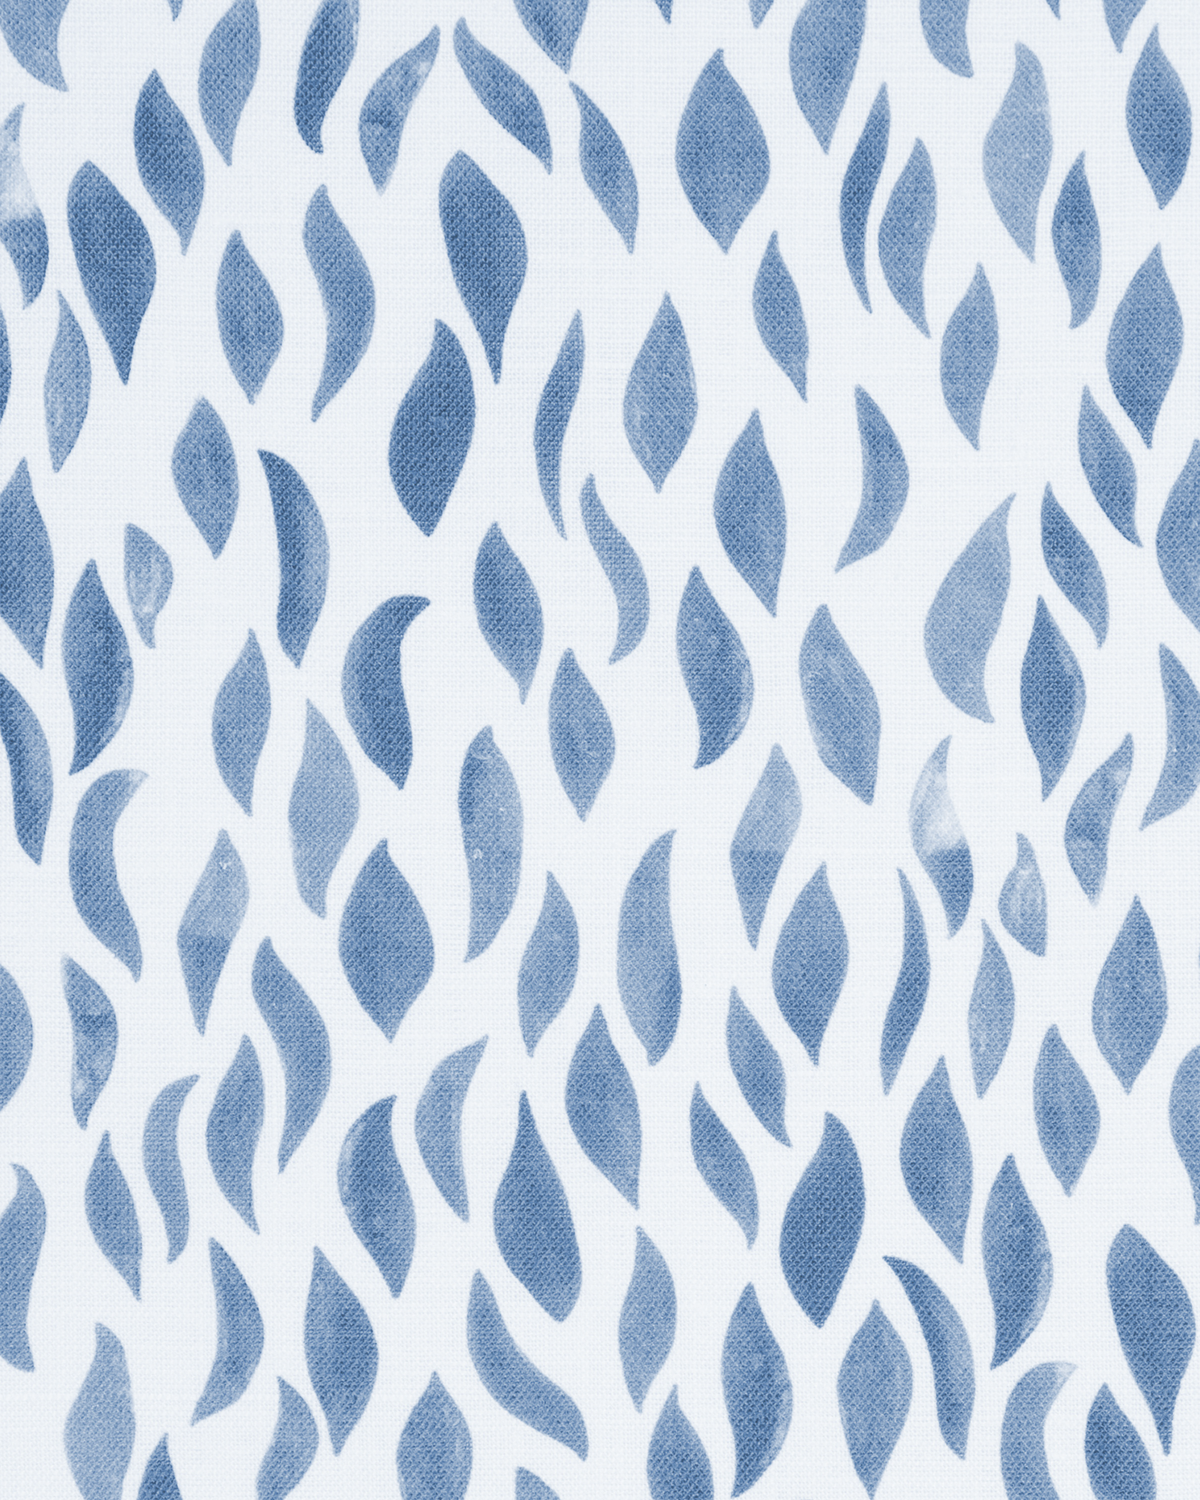 Petals Fabric in Ocean Blue